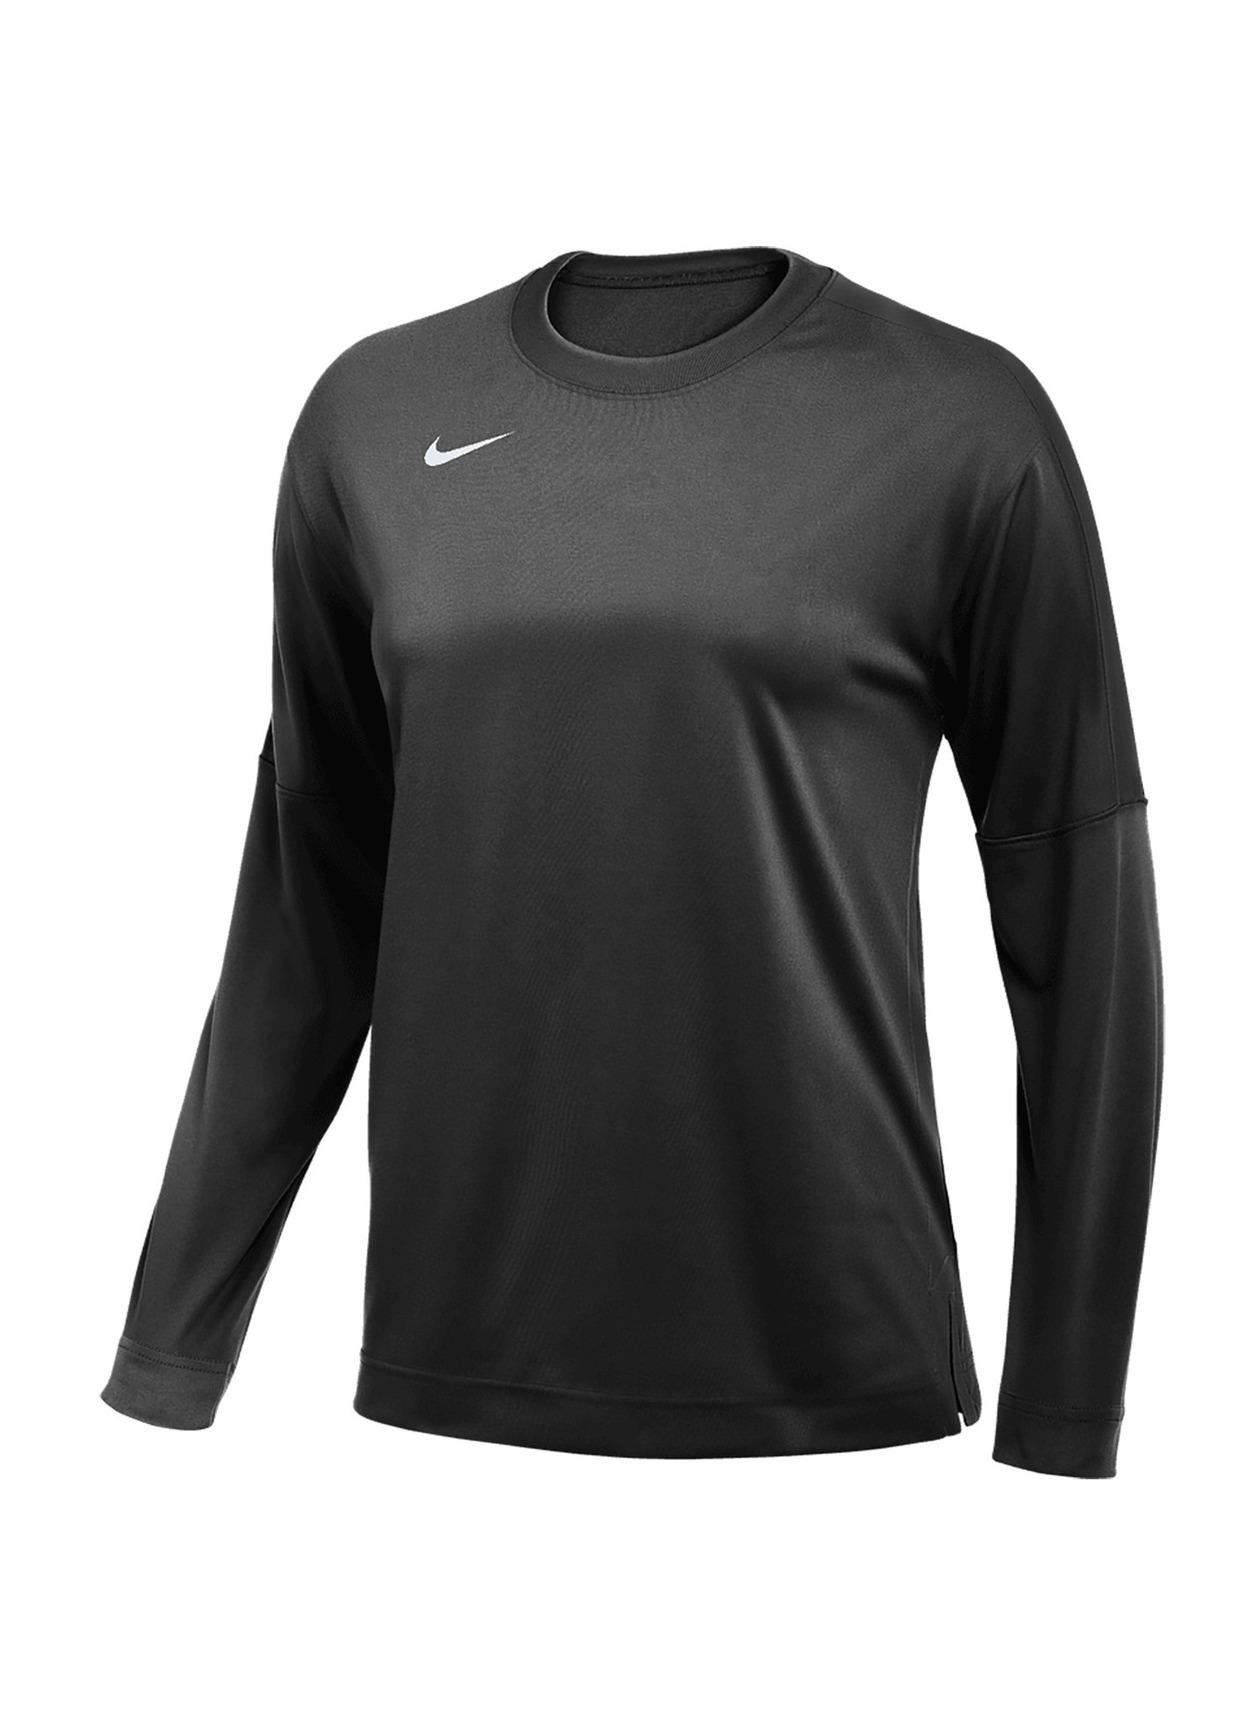 Nike Women's Team Black / White Shooting Long-Sleeve T-Shirt